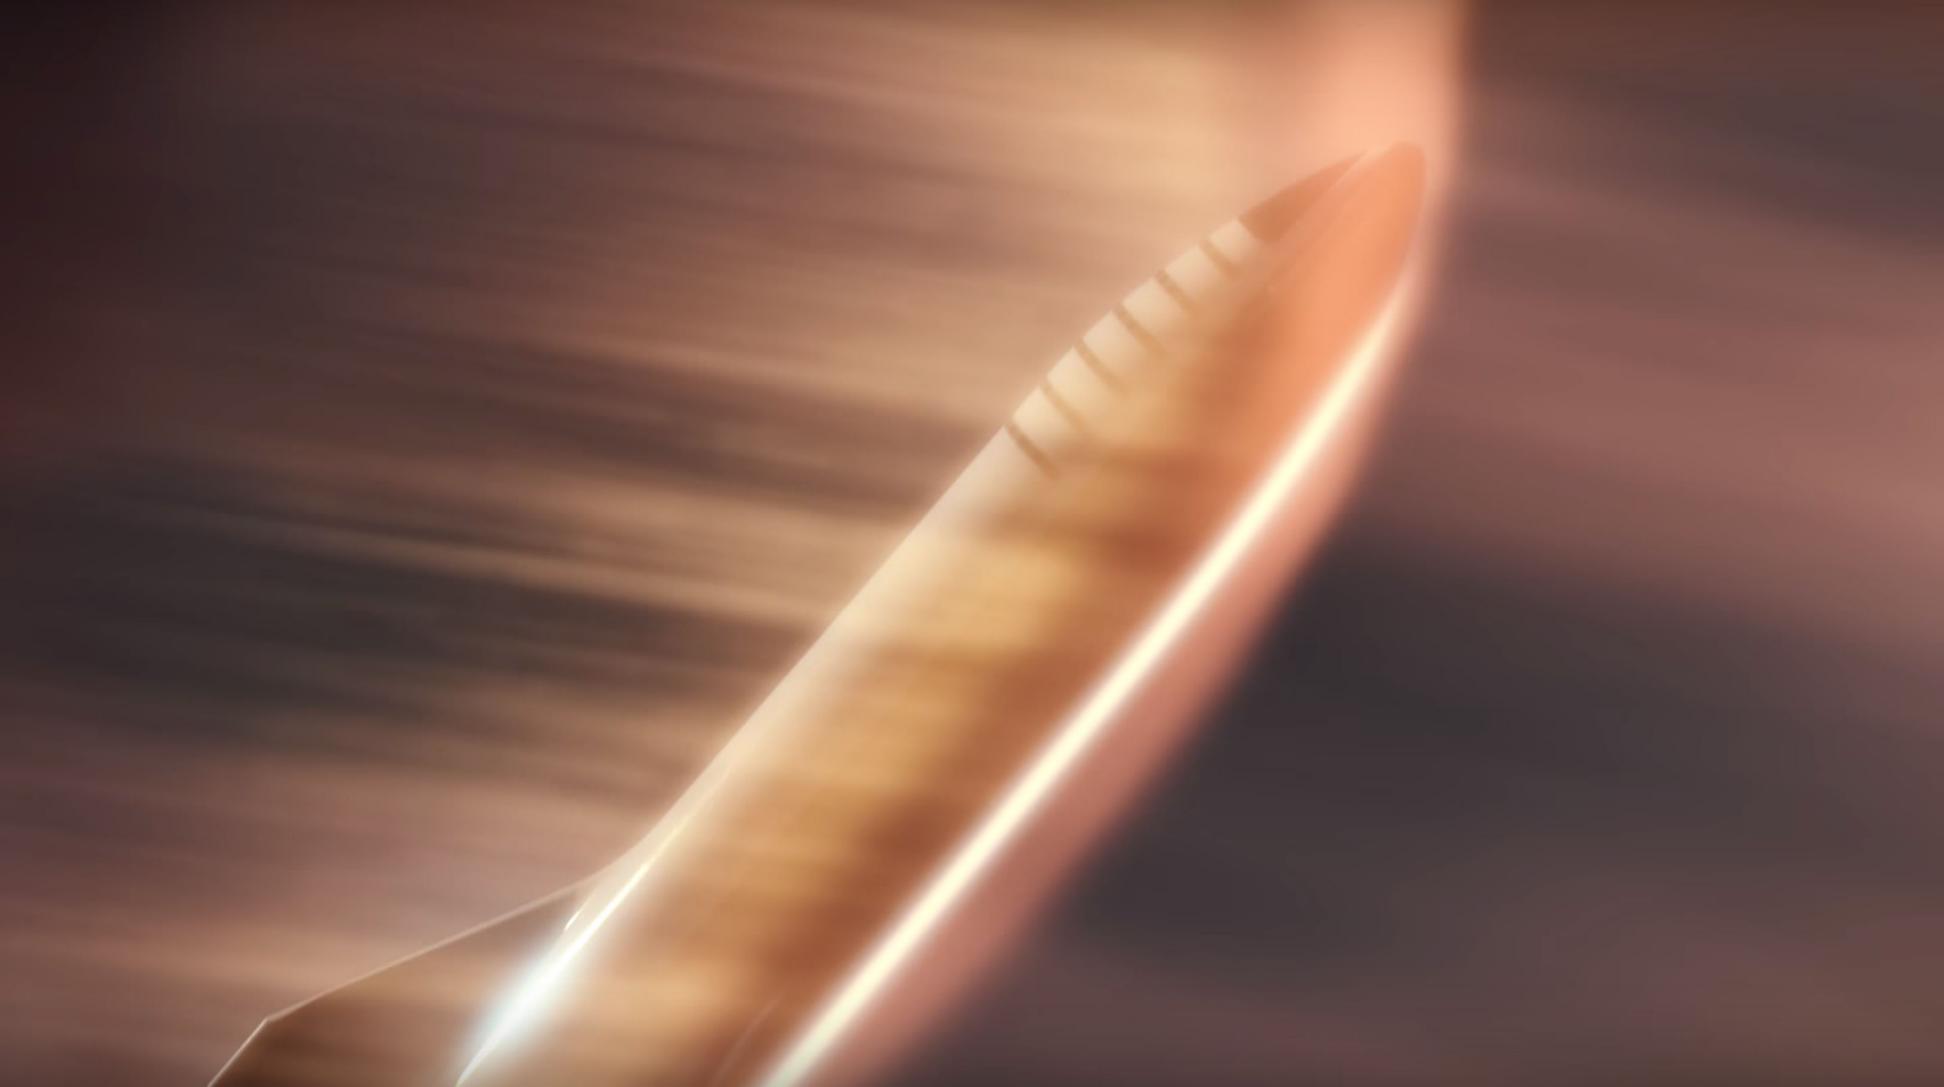 https://www.teslarati.com/wp-content/uploads/2018/11/BFR-2018-Mars-reentry-SpaceX-1c.jpg